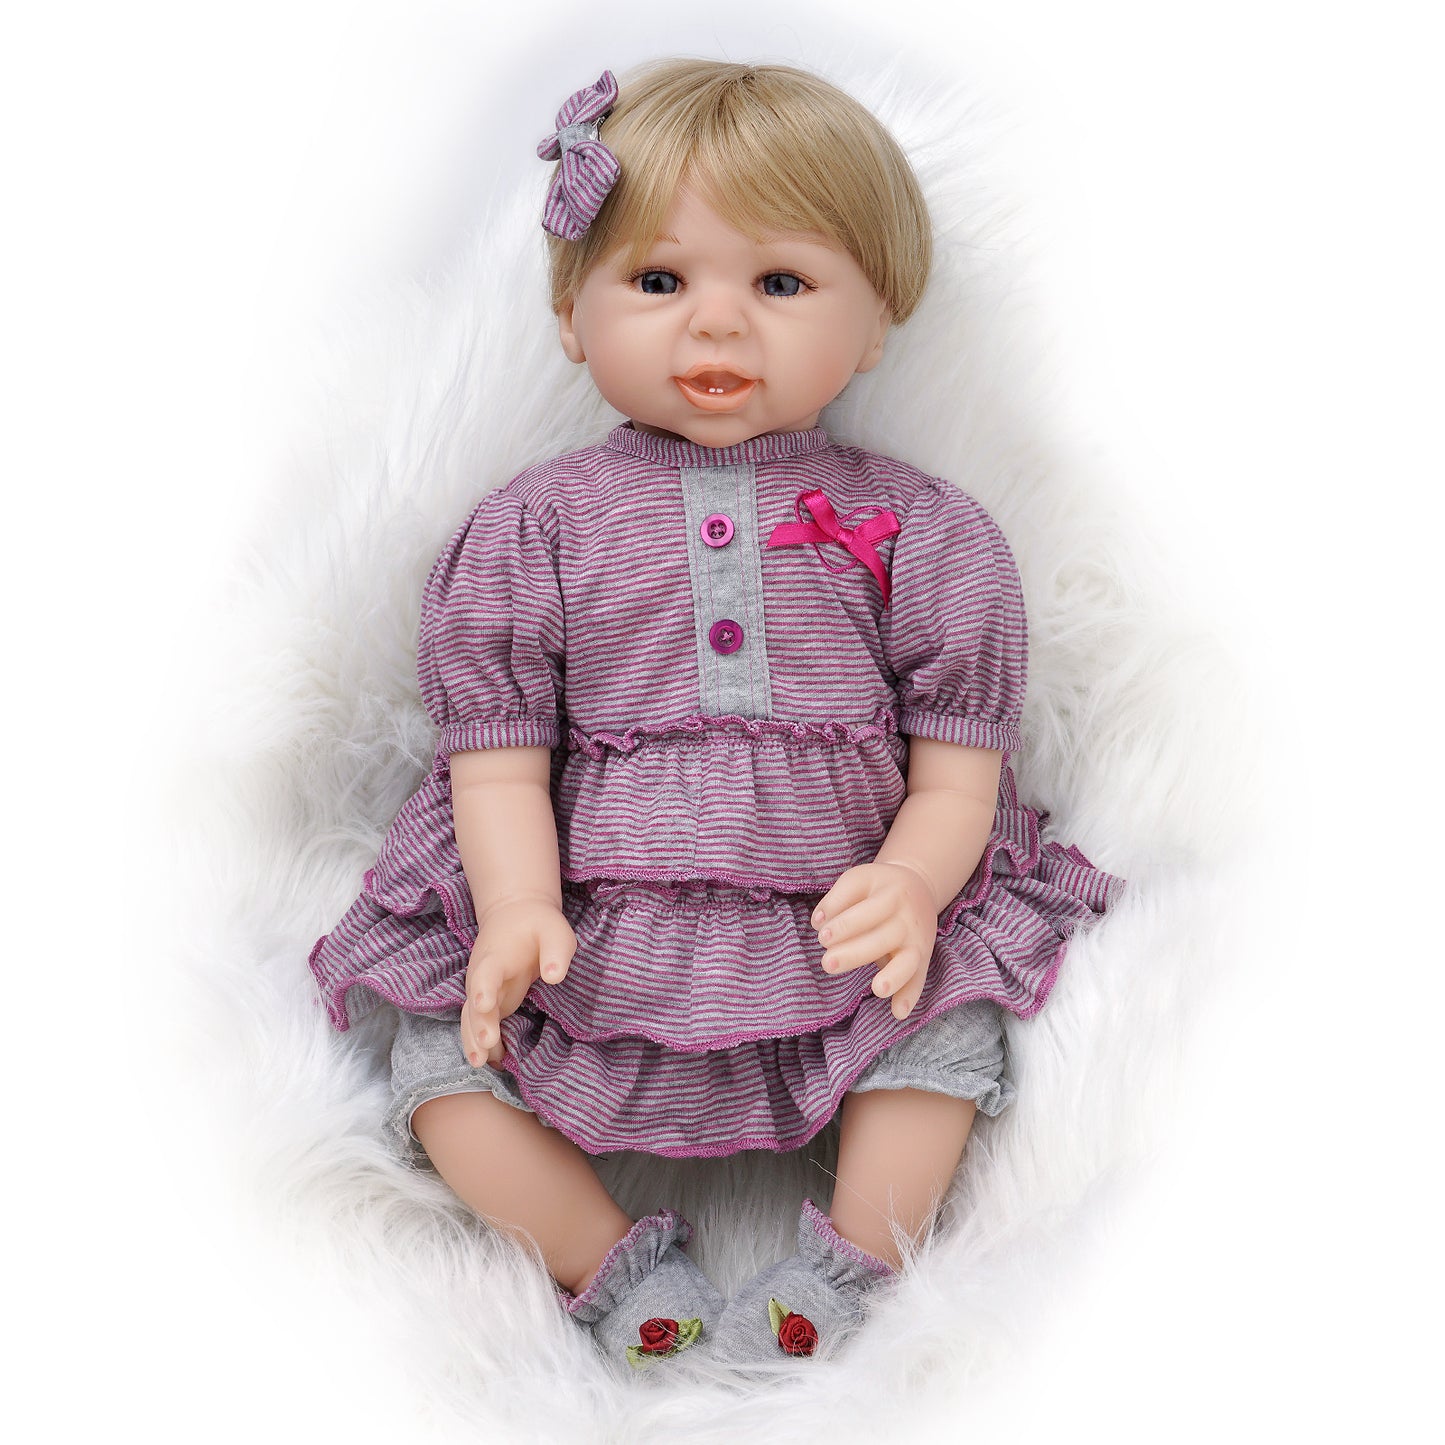 Lynne-Purple Striped Dress-22 Inch Realistic Reborn Baby Dolls Blue Eyes Blonde Hair